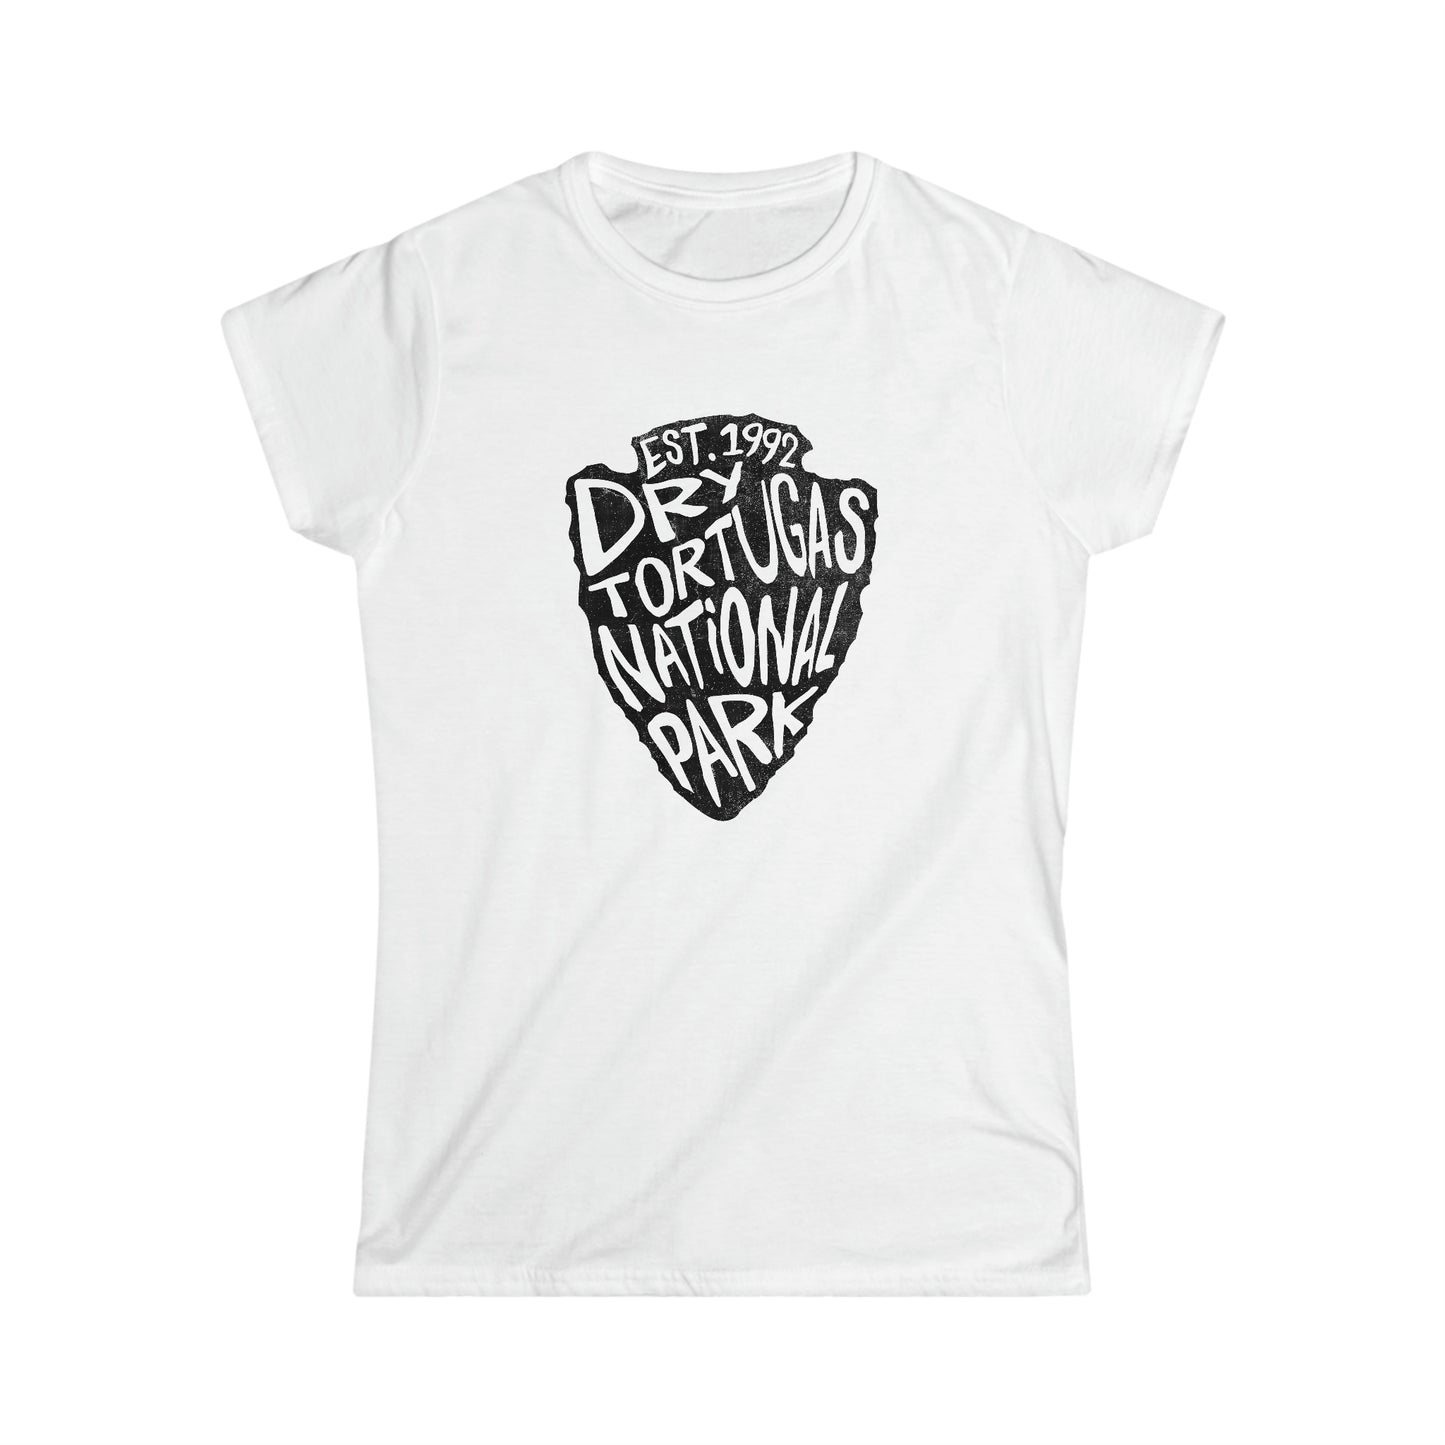 Dry Tortugas National Park Women's T-Shirt - Arrowhead Design